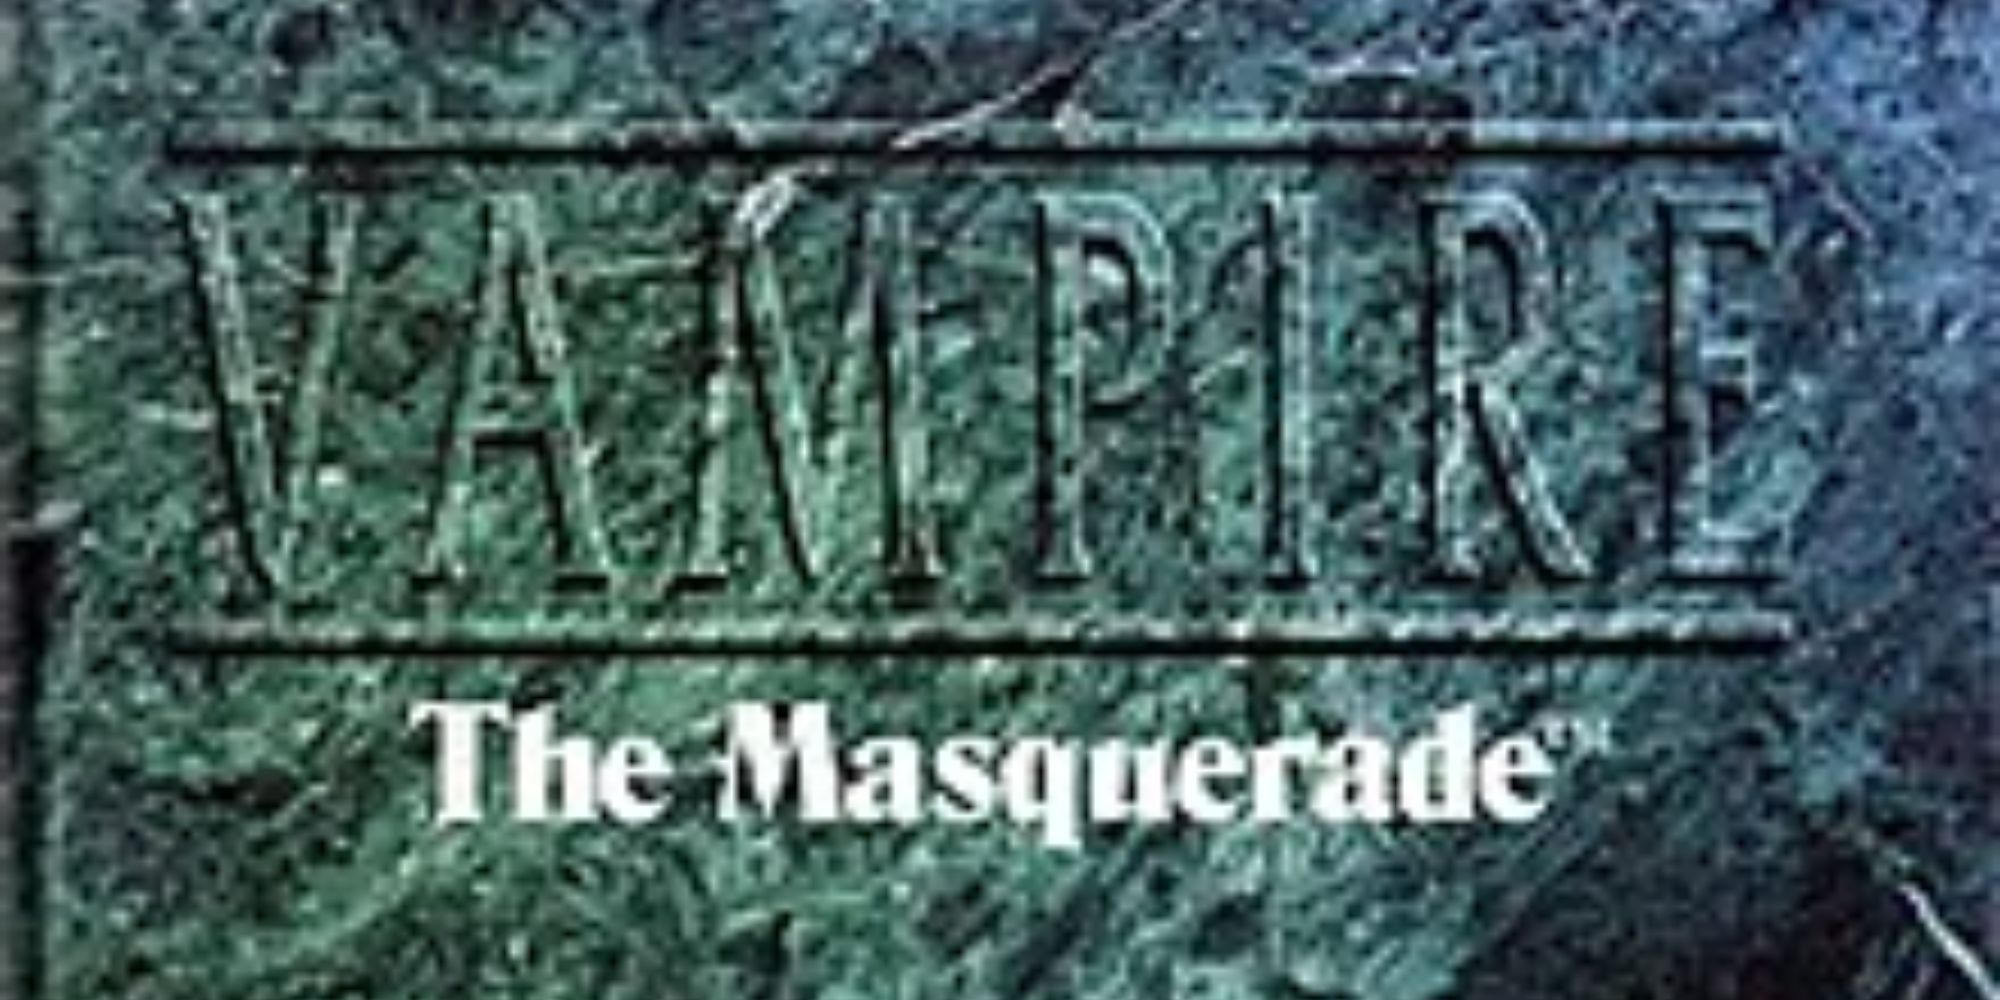 Vampire The Masquerade Title card in stone